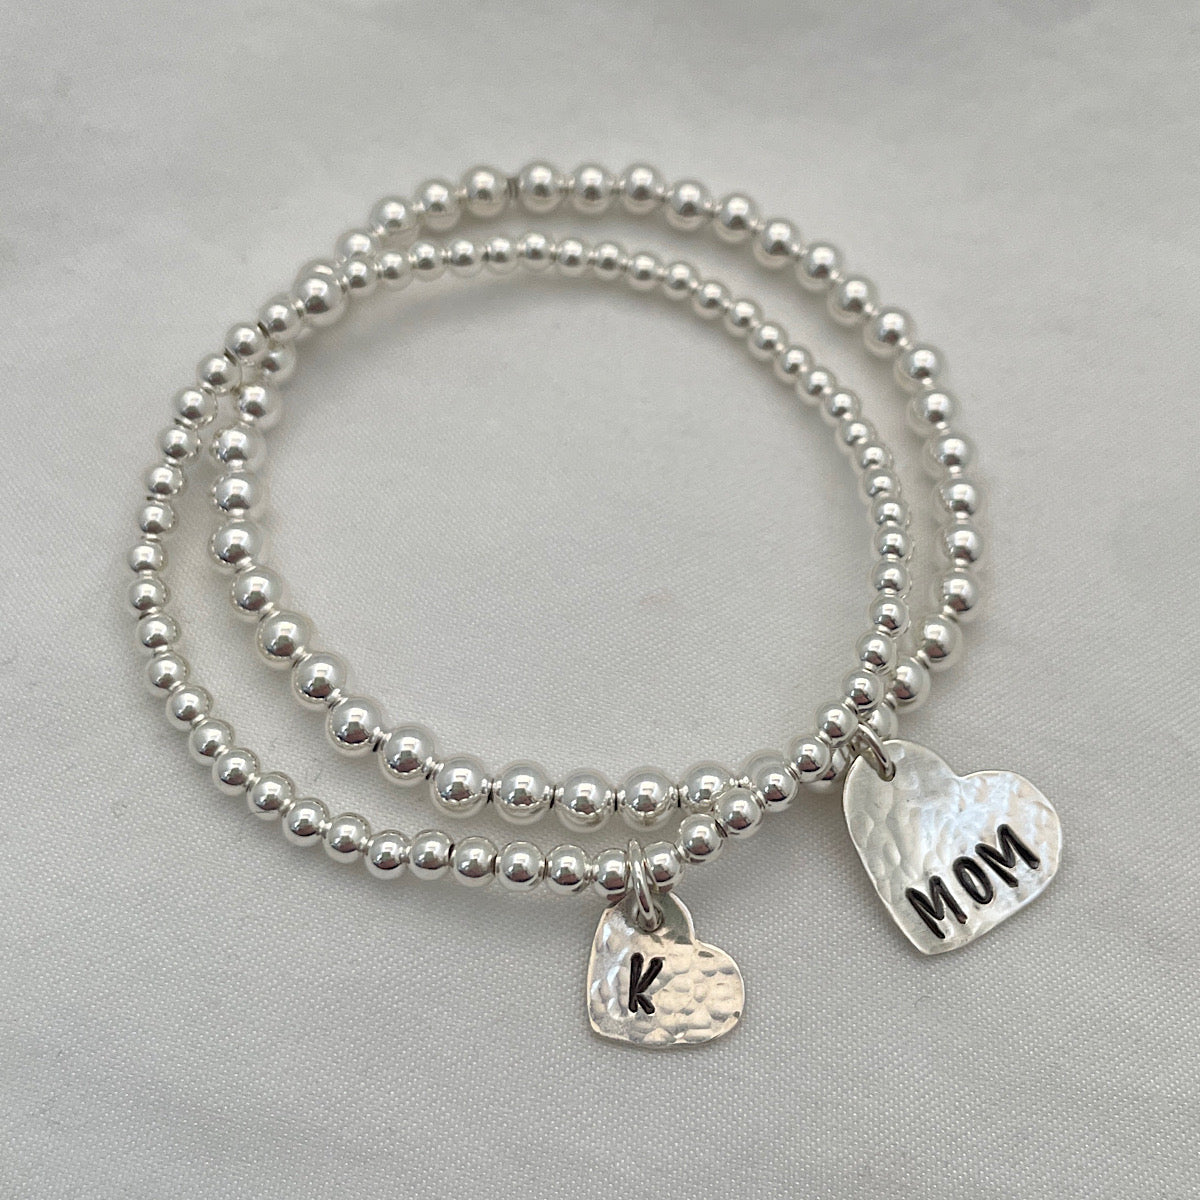 Heart Personalized Charm Bead Bracelet Sterling Silver